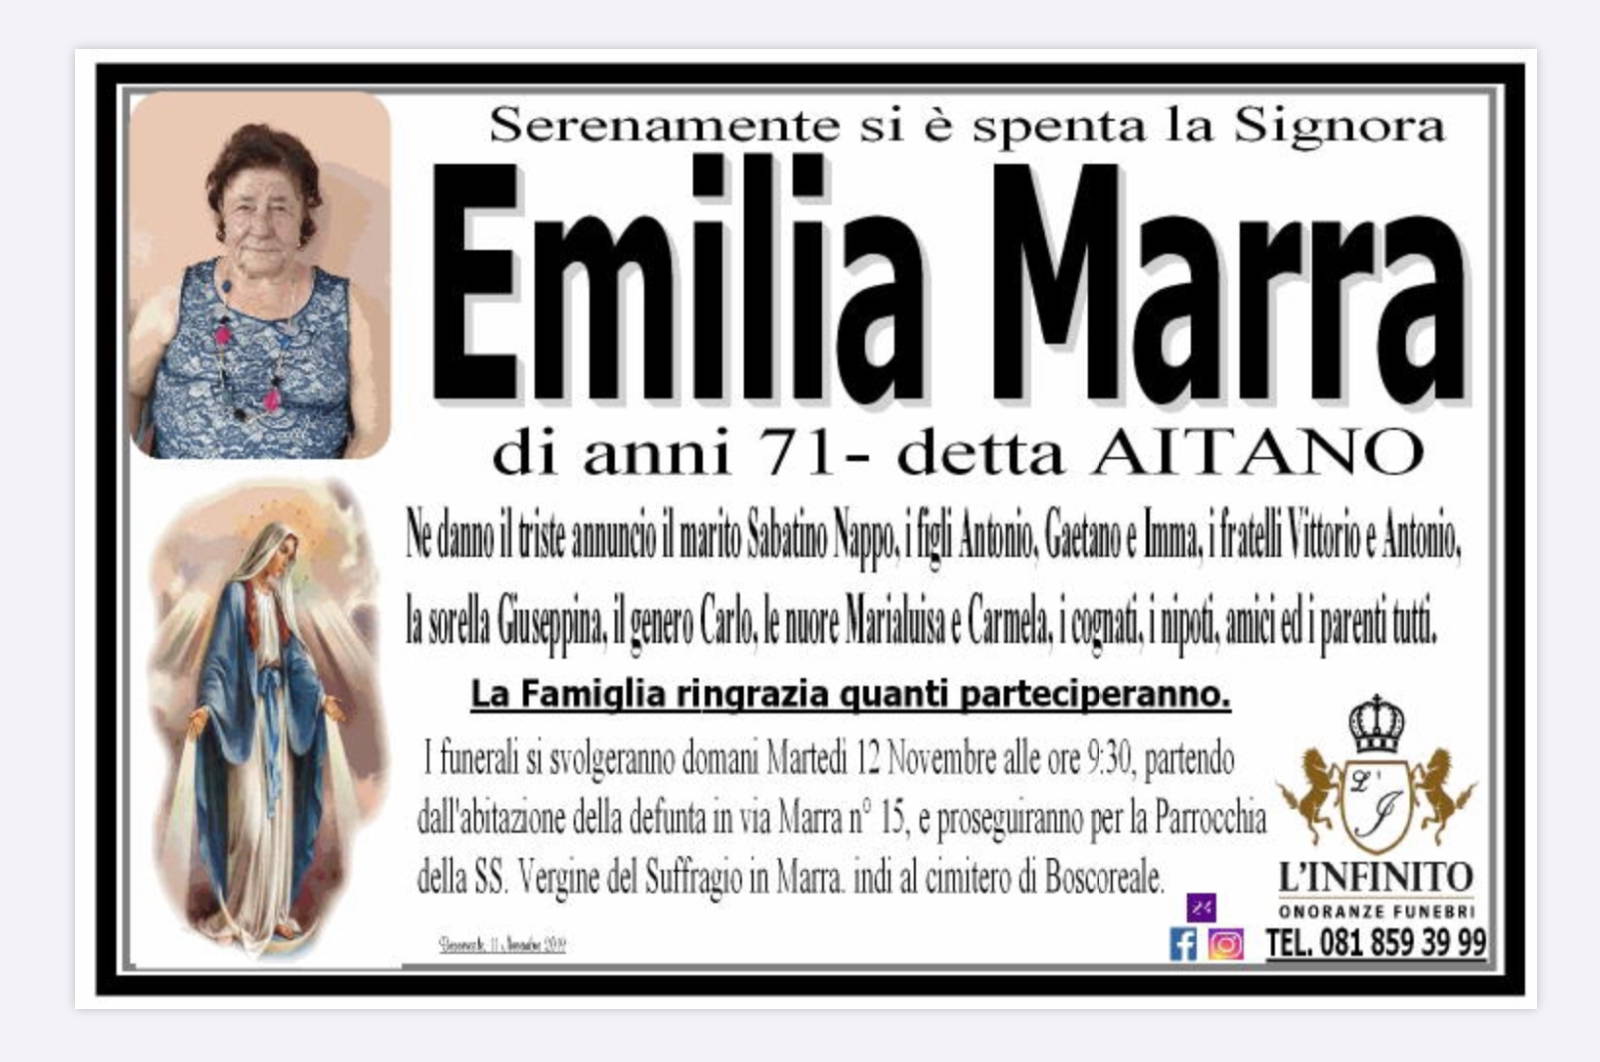 Emilia Marra